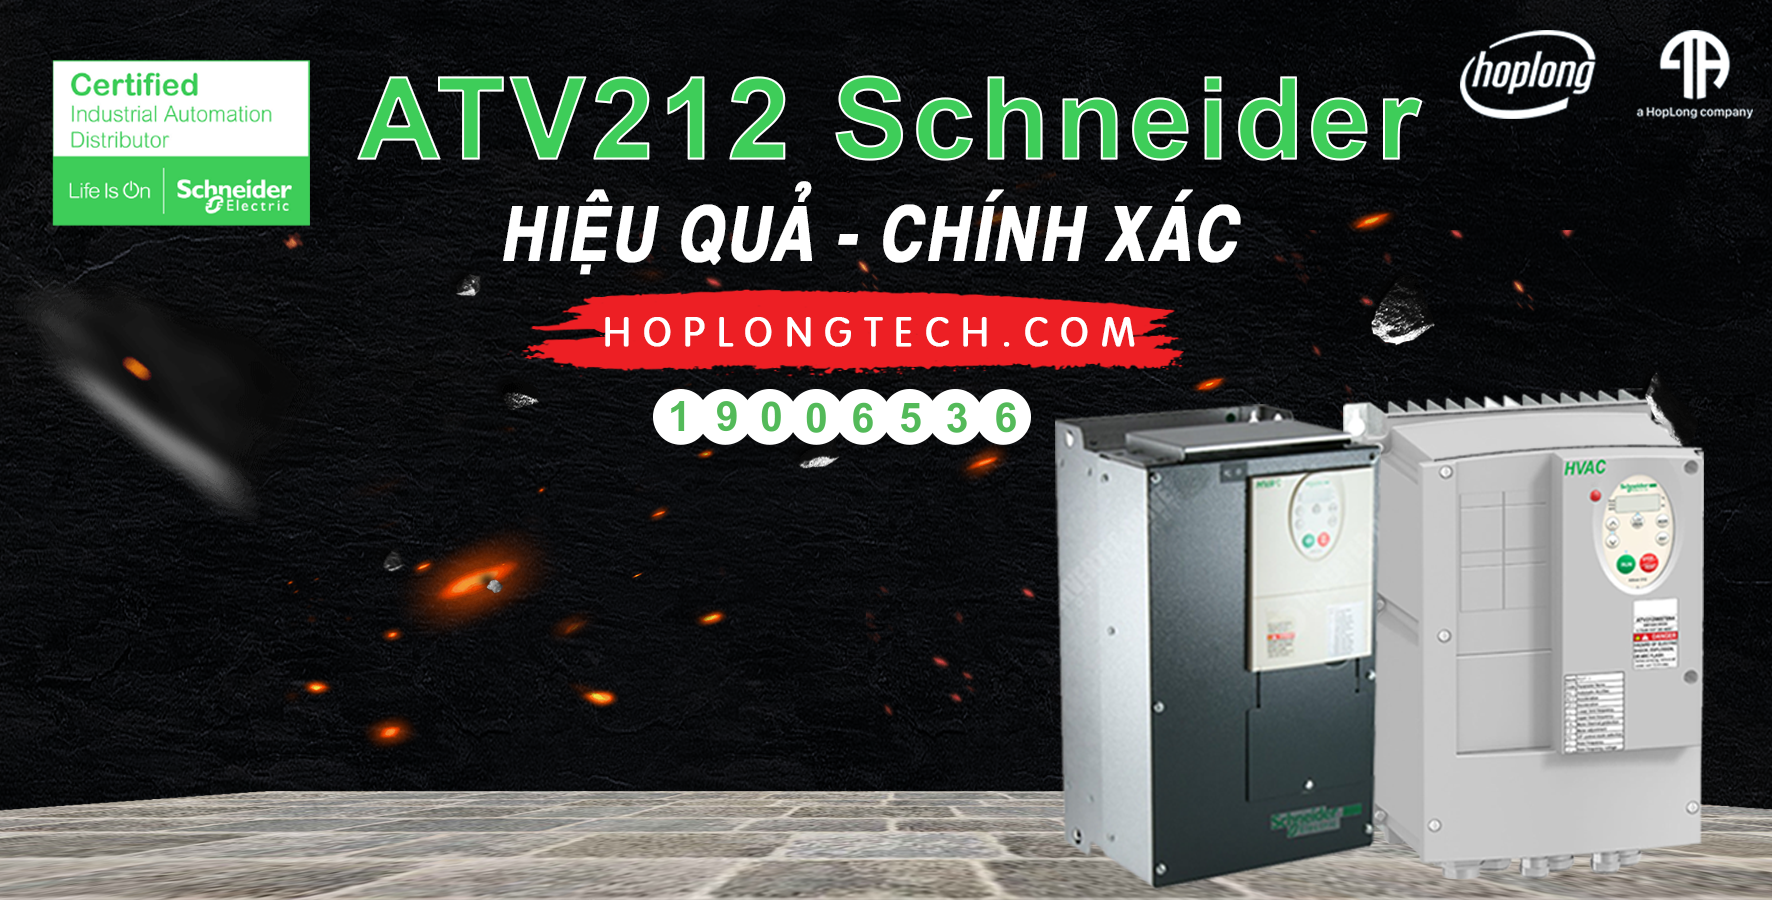 Tổng quan về biến tần ATV212 Schneider